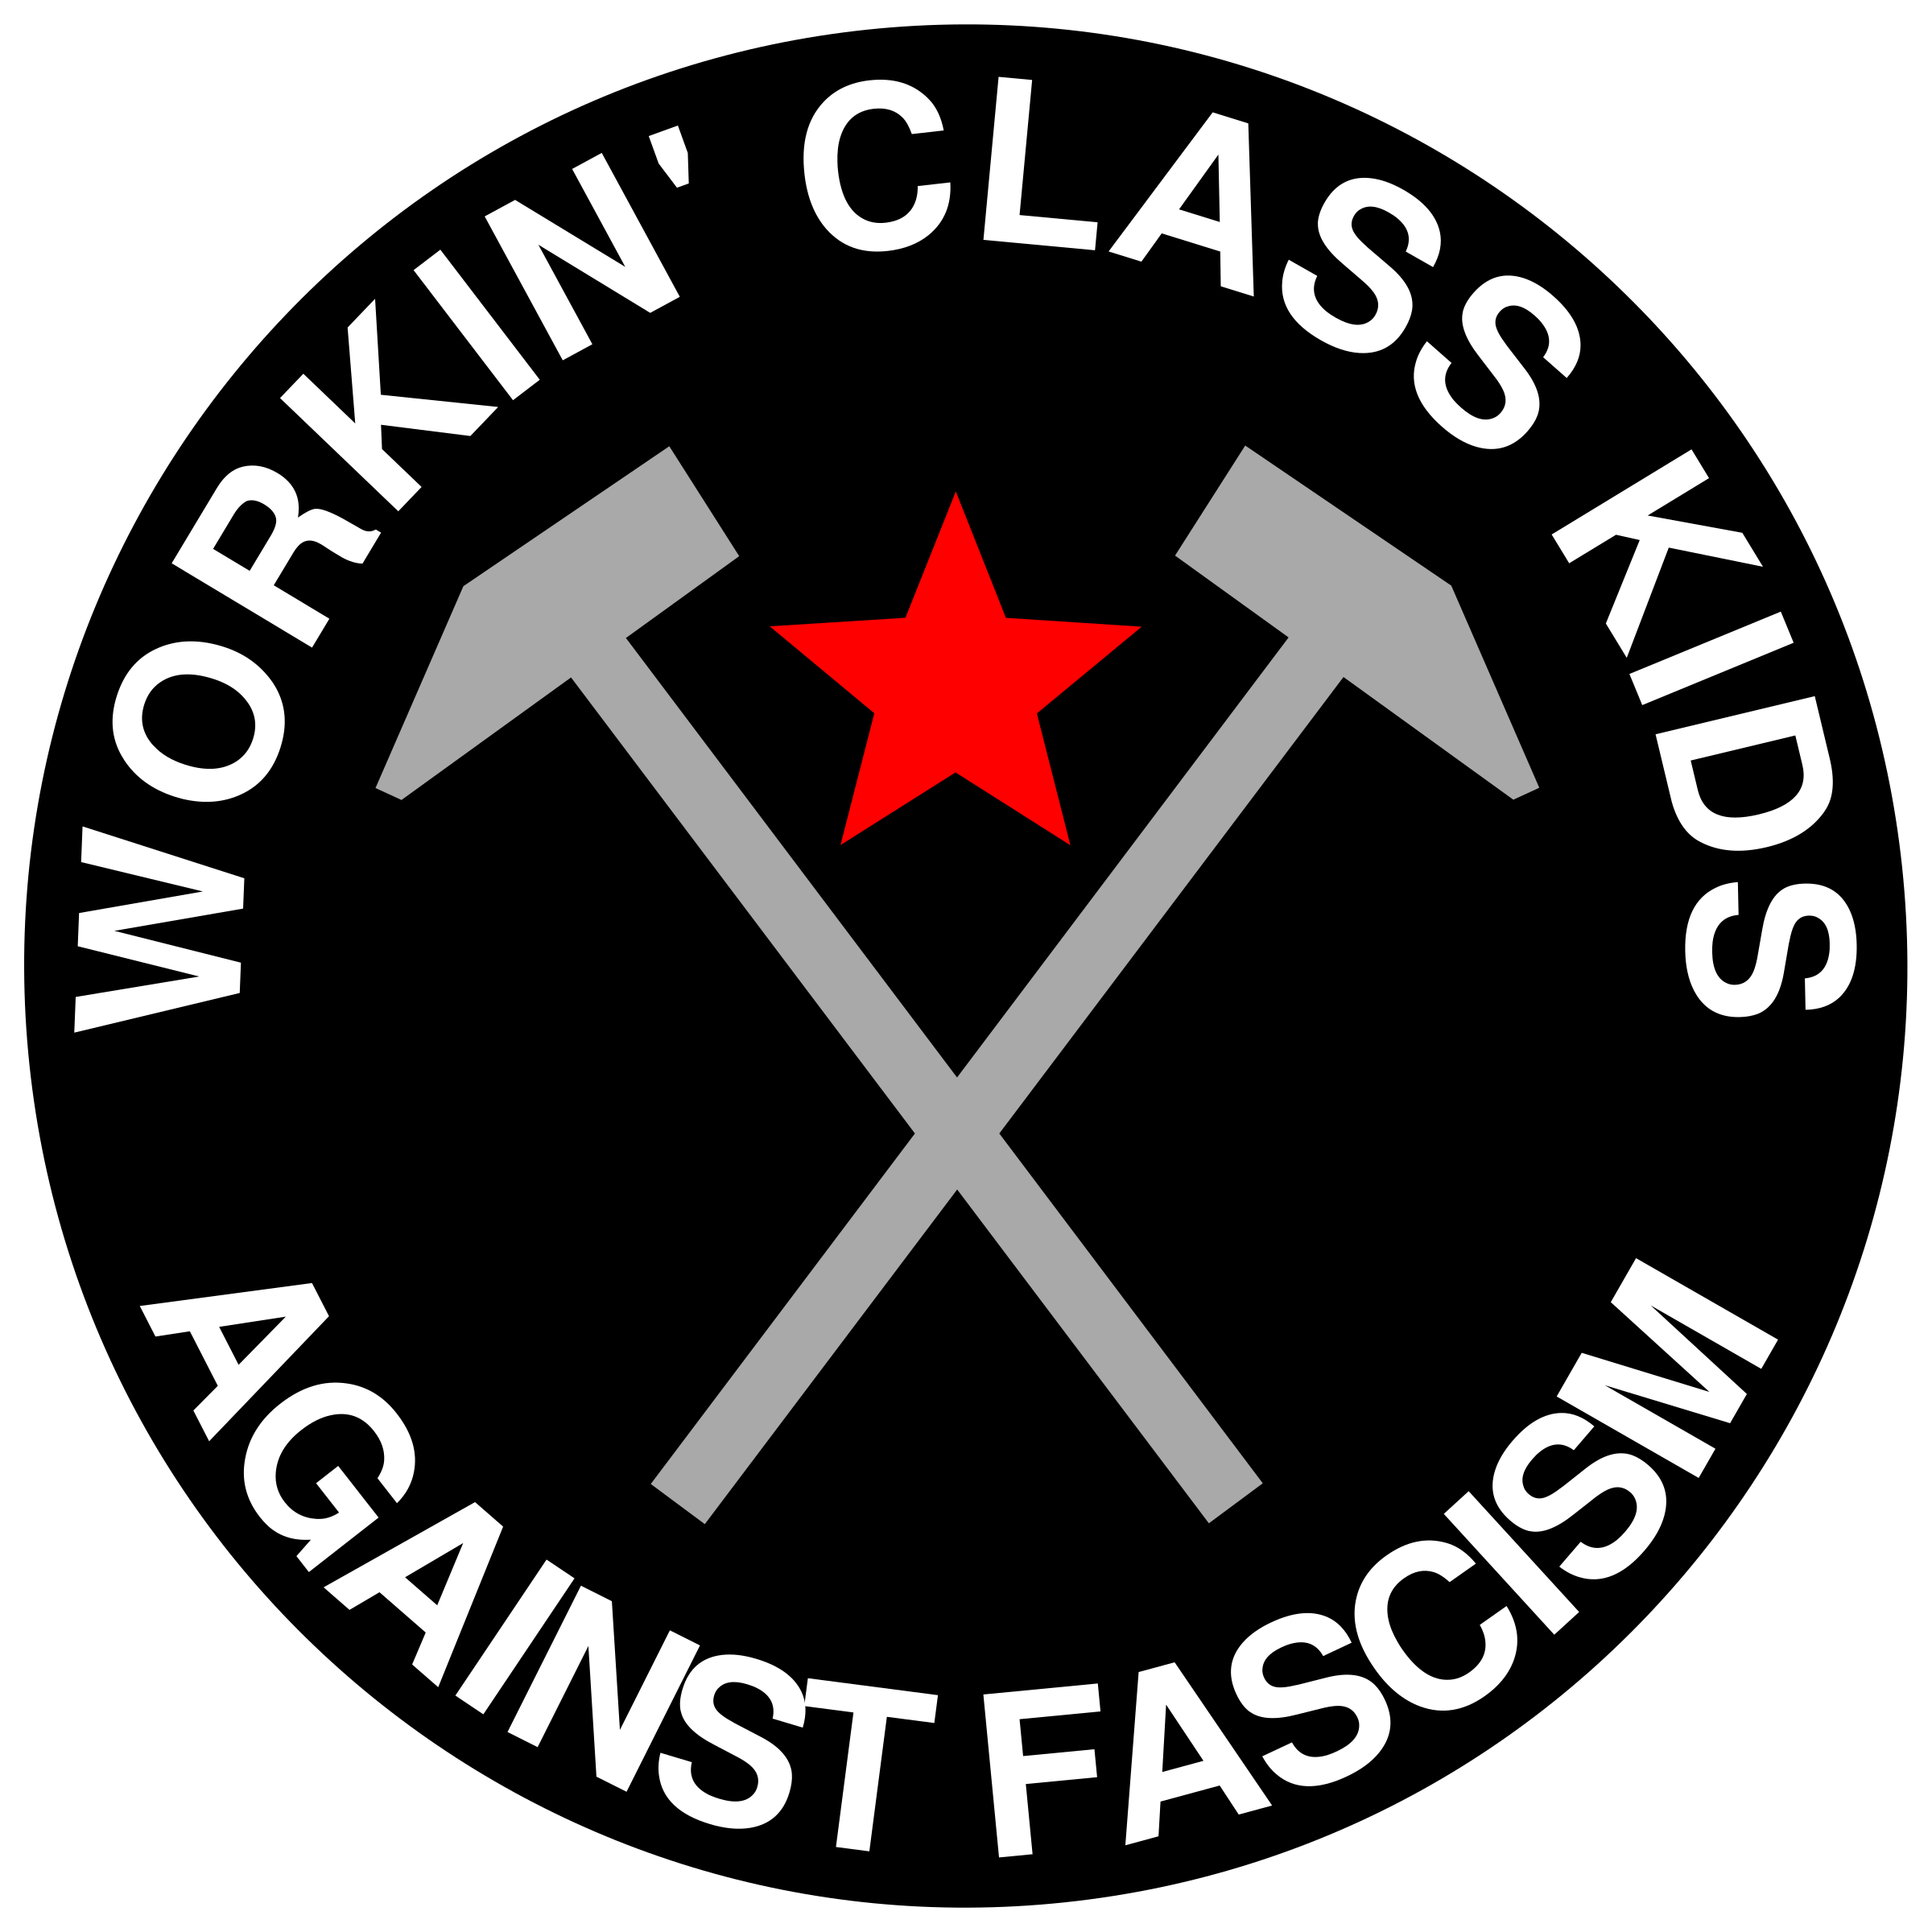 Working clipart class work. Workin kids against fascism